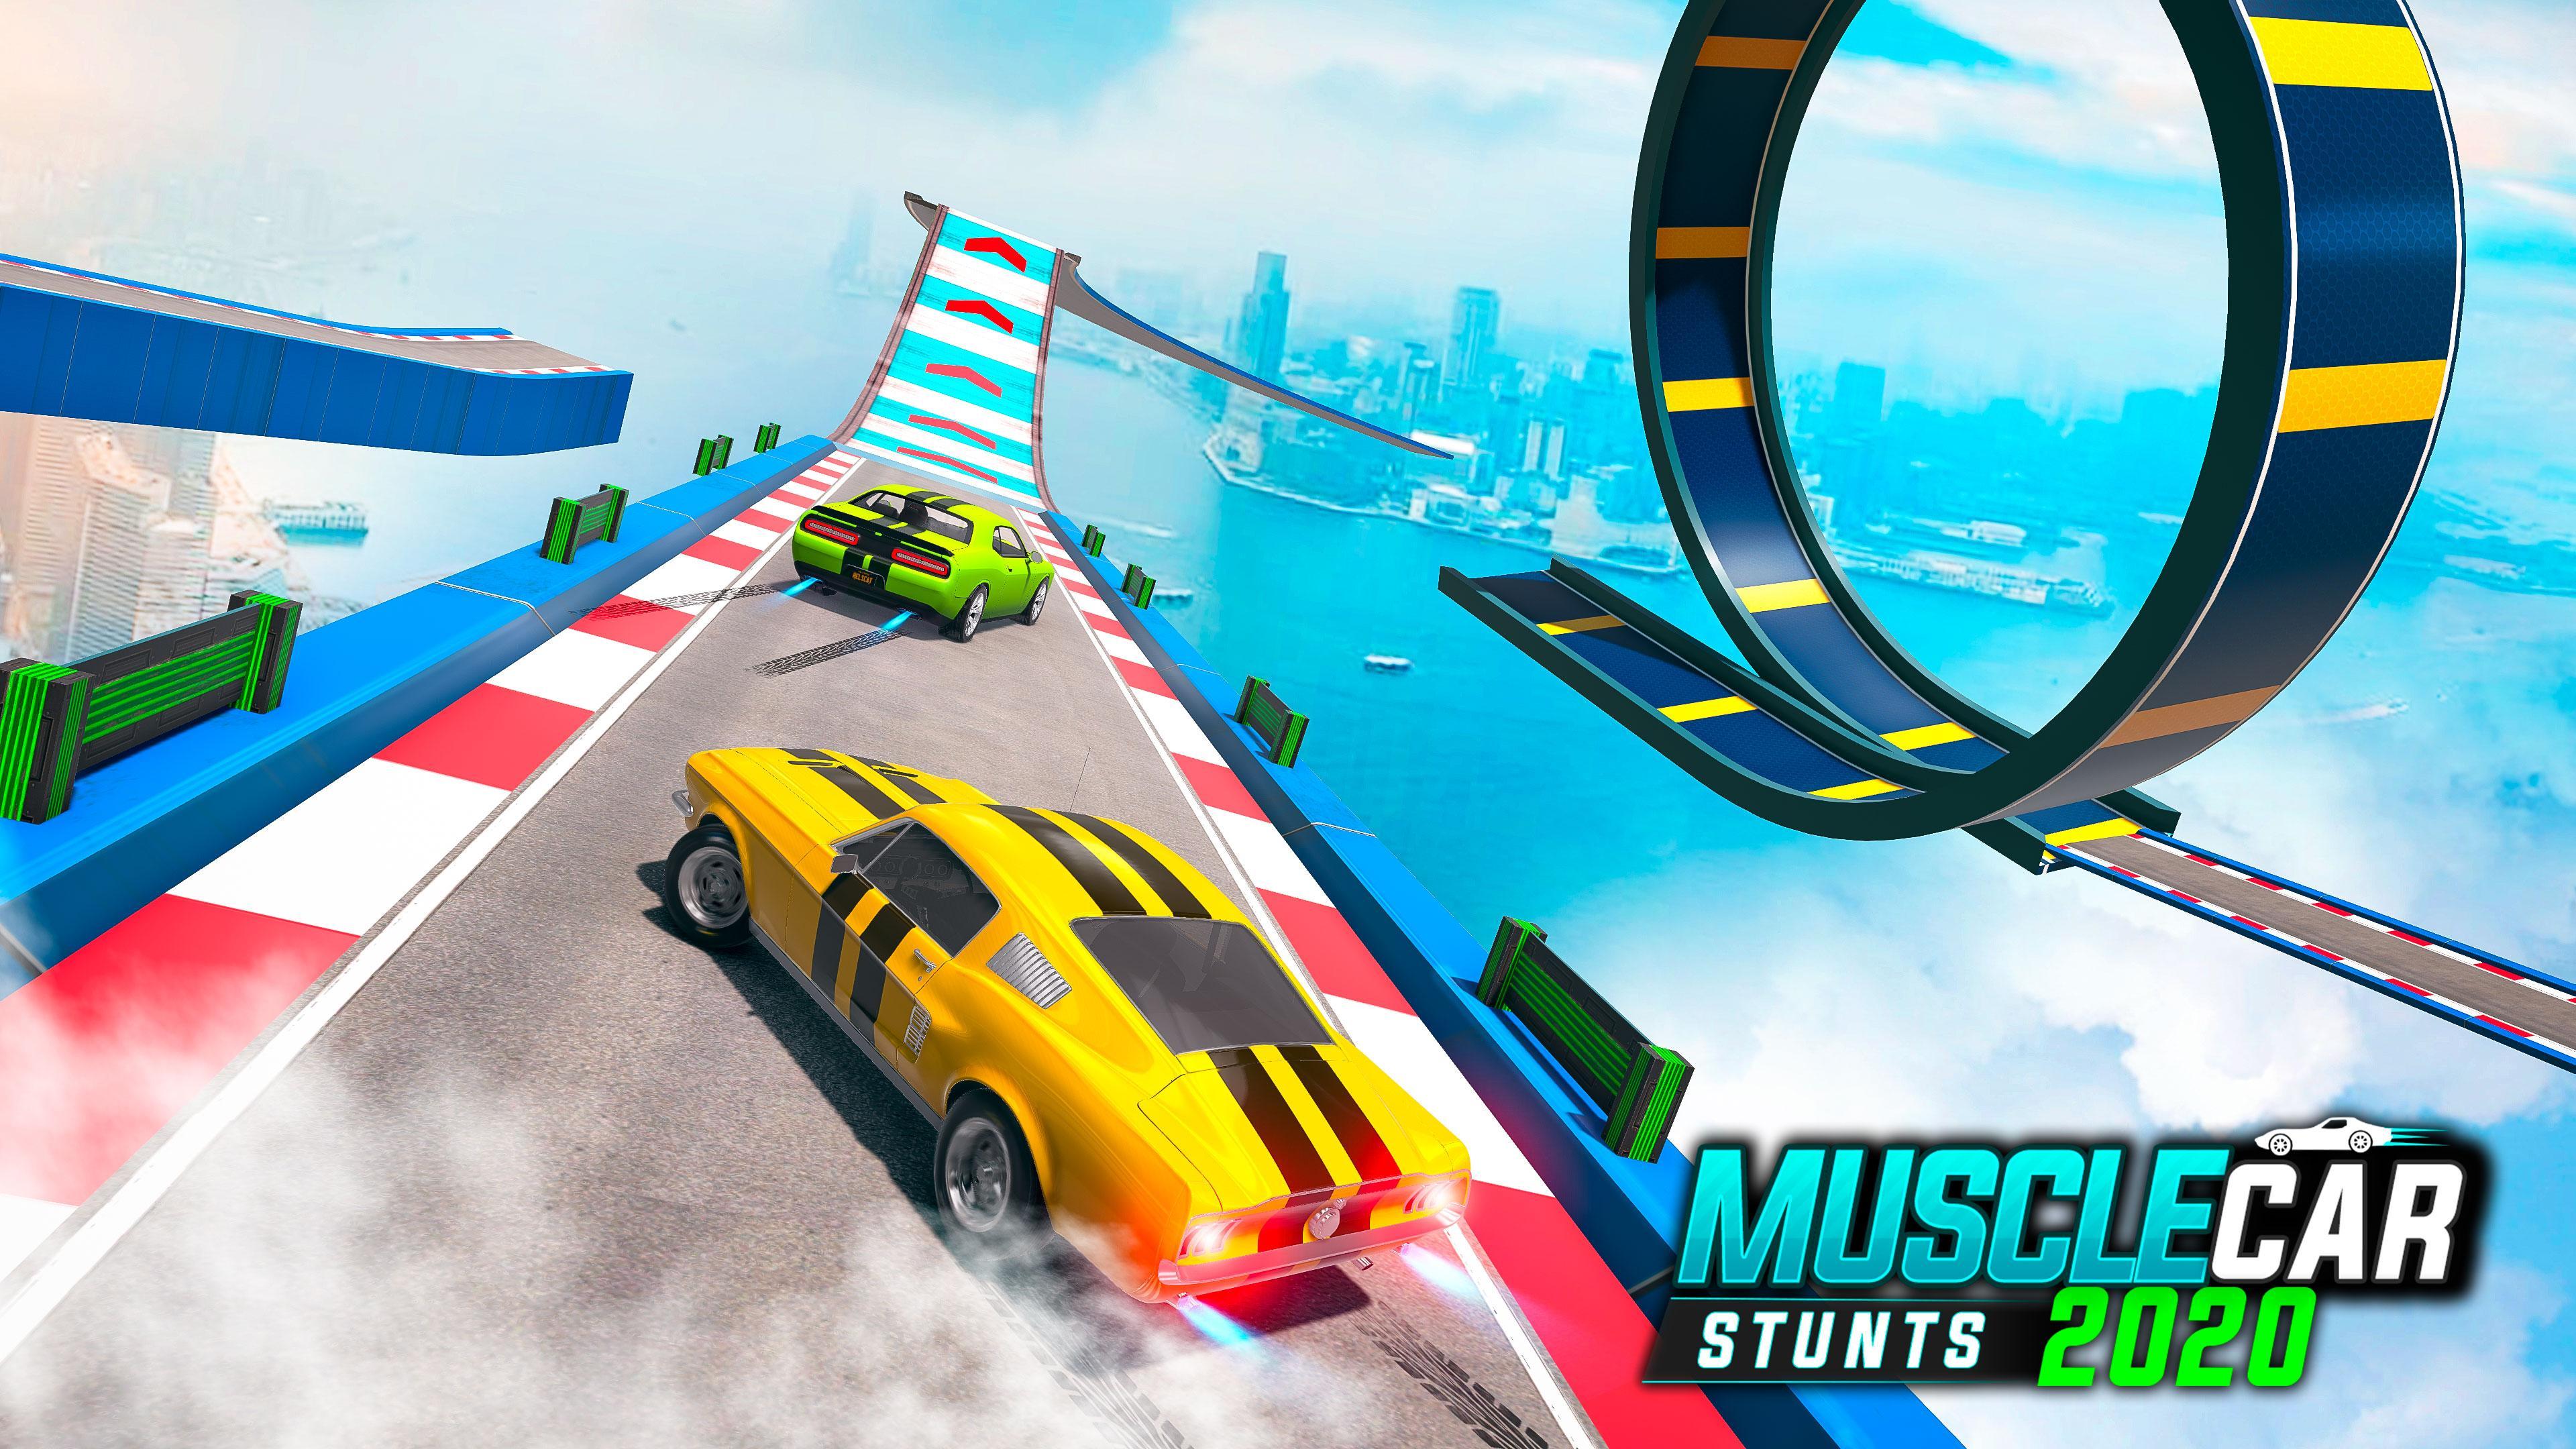 Muscle Car Stunts 2020 Mega Ramp Stunt Car Games 1.0.9 Screenshot 10